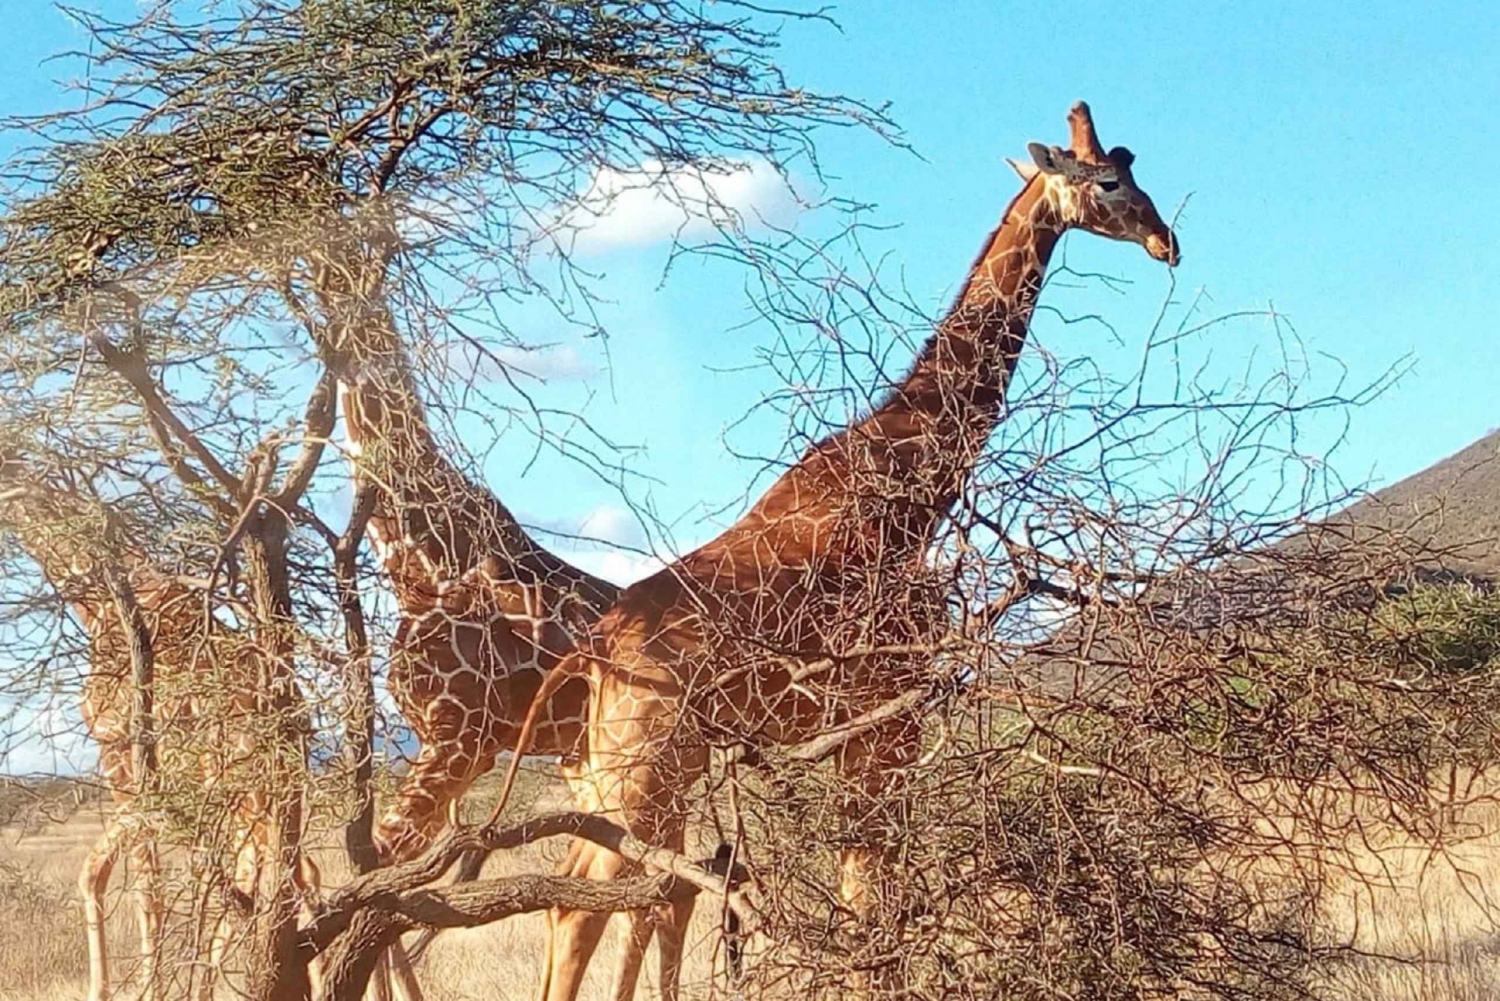 Nairobi National Park, Elephants, Giraffes & Bomas Day Trip